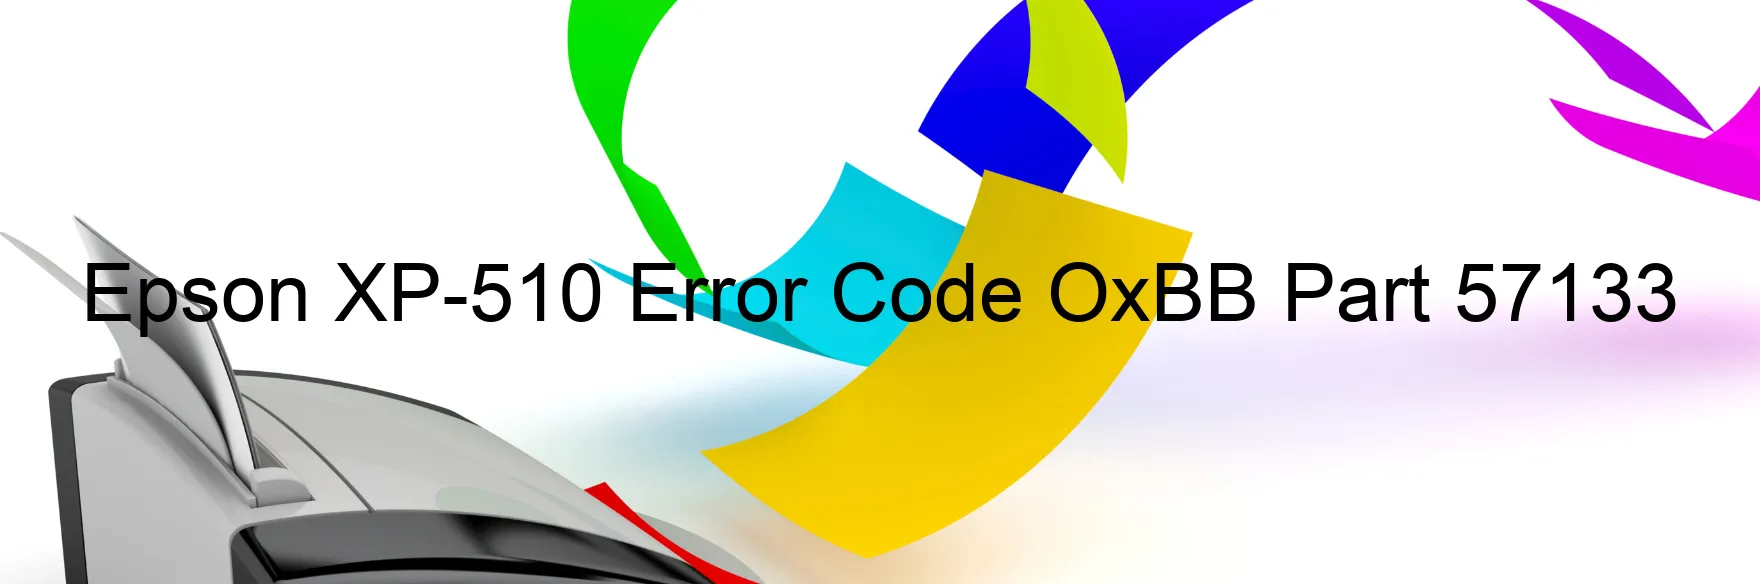 Epson XP-510 Error Code OxBB Part 57133